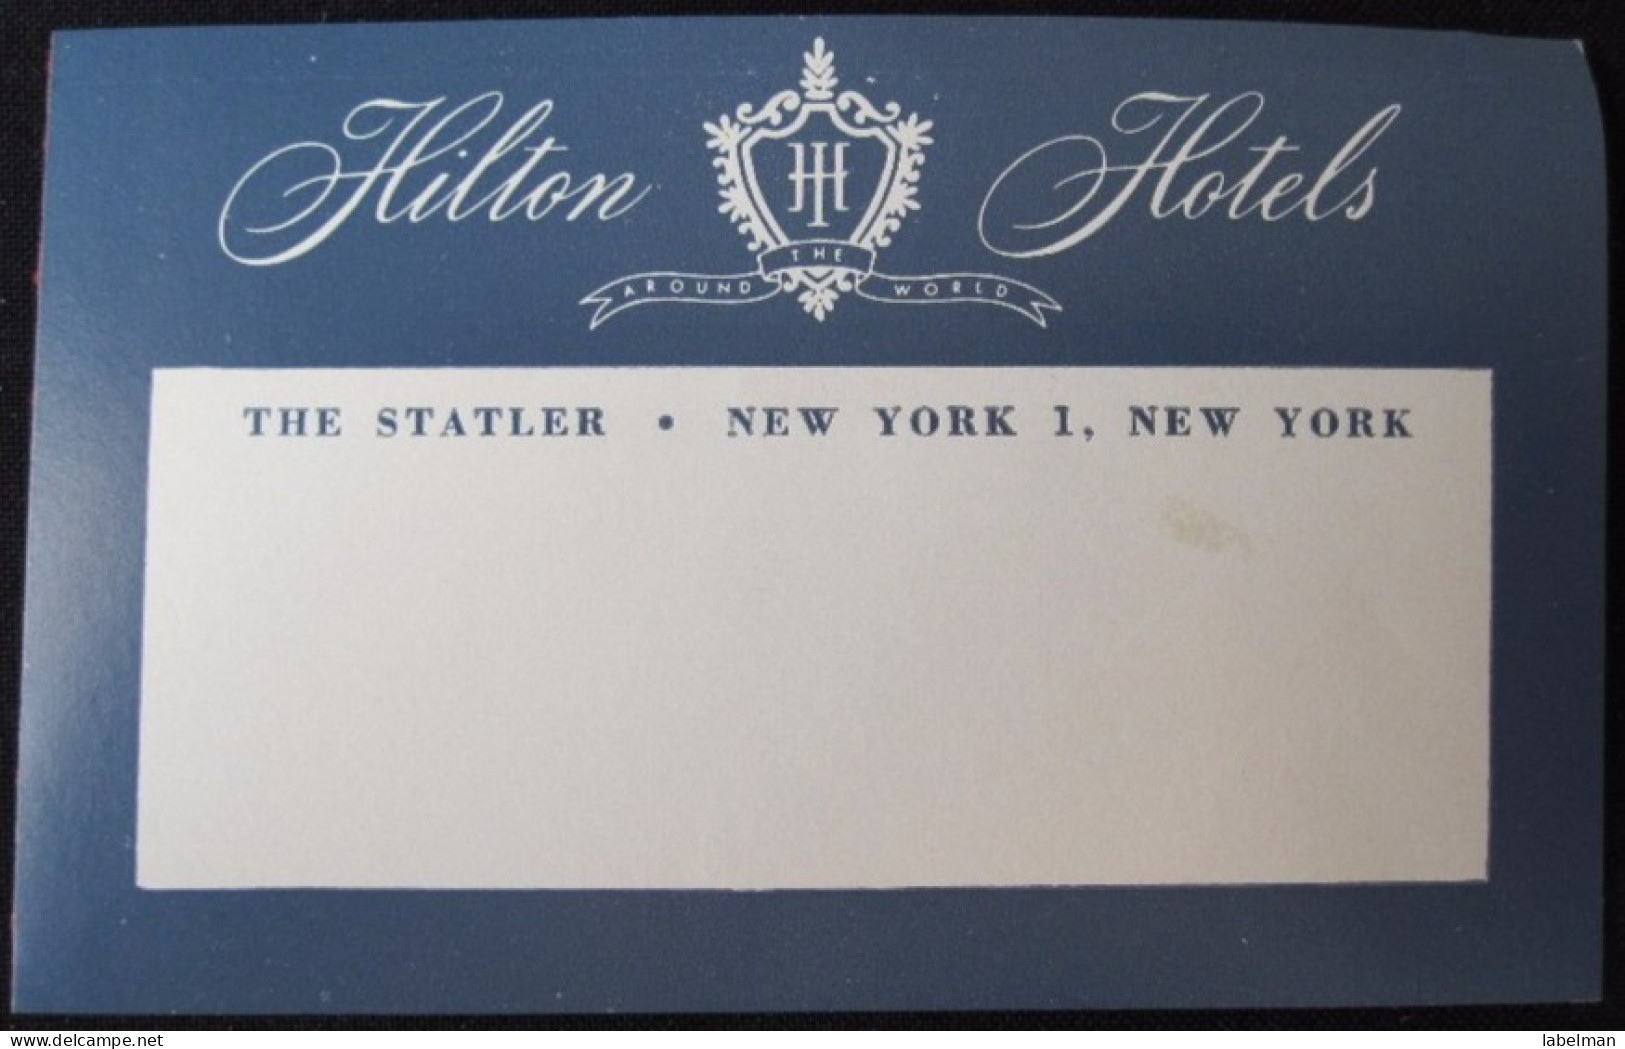 HOTEL MOTEL MOTOR INN STATLER HILTON MADISON NEW YORK USA UNITED STATES LUGGAGE LABEL ETIQUETTE AUFKLEBER DECAL STICKER - Hotel Labels